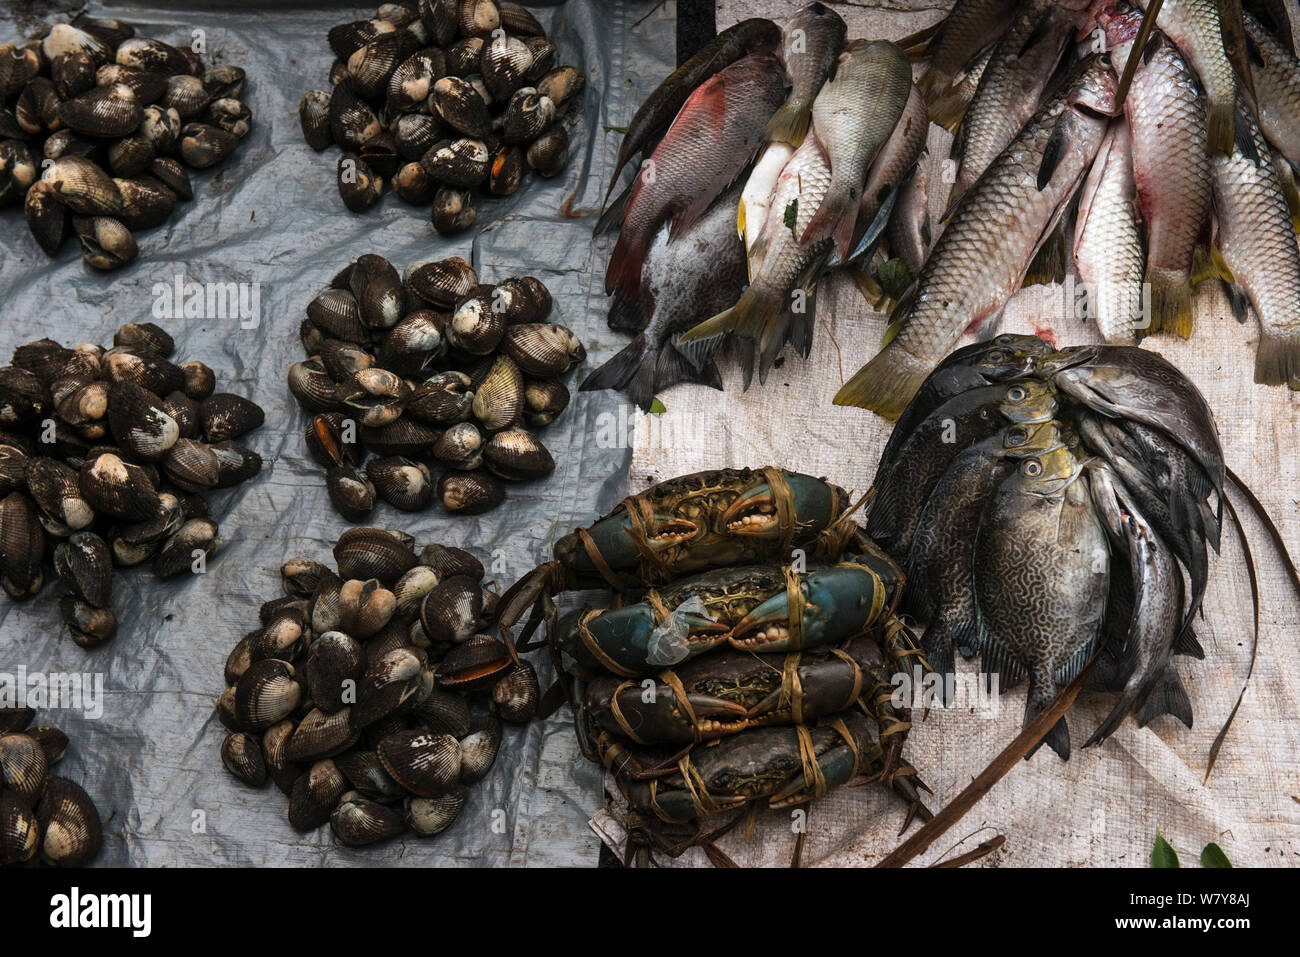 Reef fish, crabs and shellfish for sale, Suva Seafood Market, Viti Levu, Fiji, South Pacific, April 2014. Stock Photo